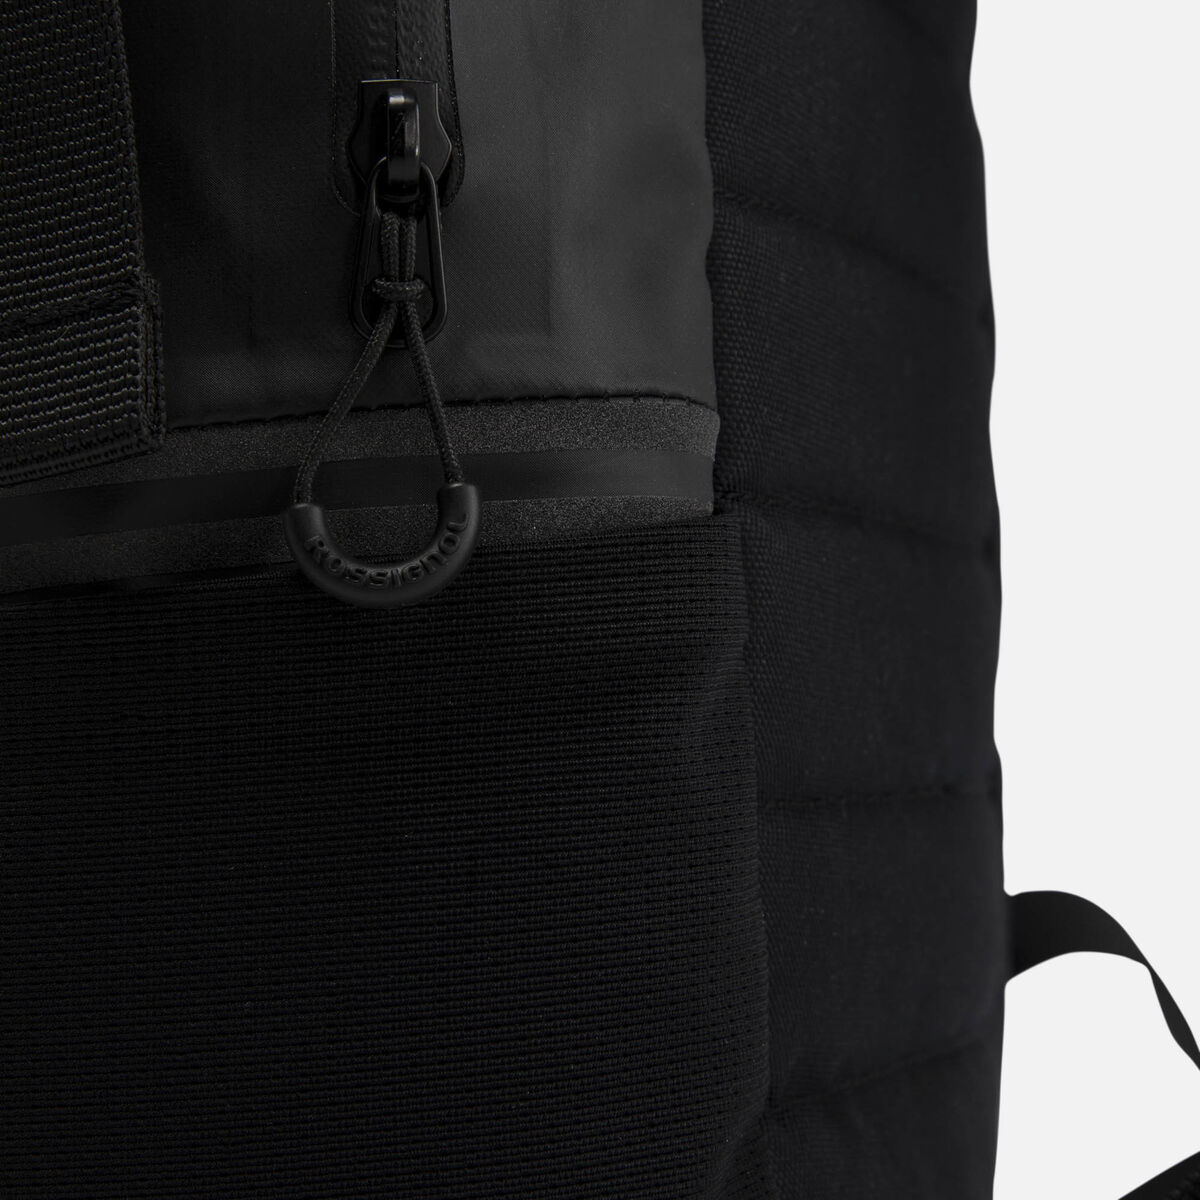 Rossignol Unisex's Commuters Bag 25L BLACK | Bags & Backpacks Unisex ...